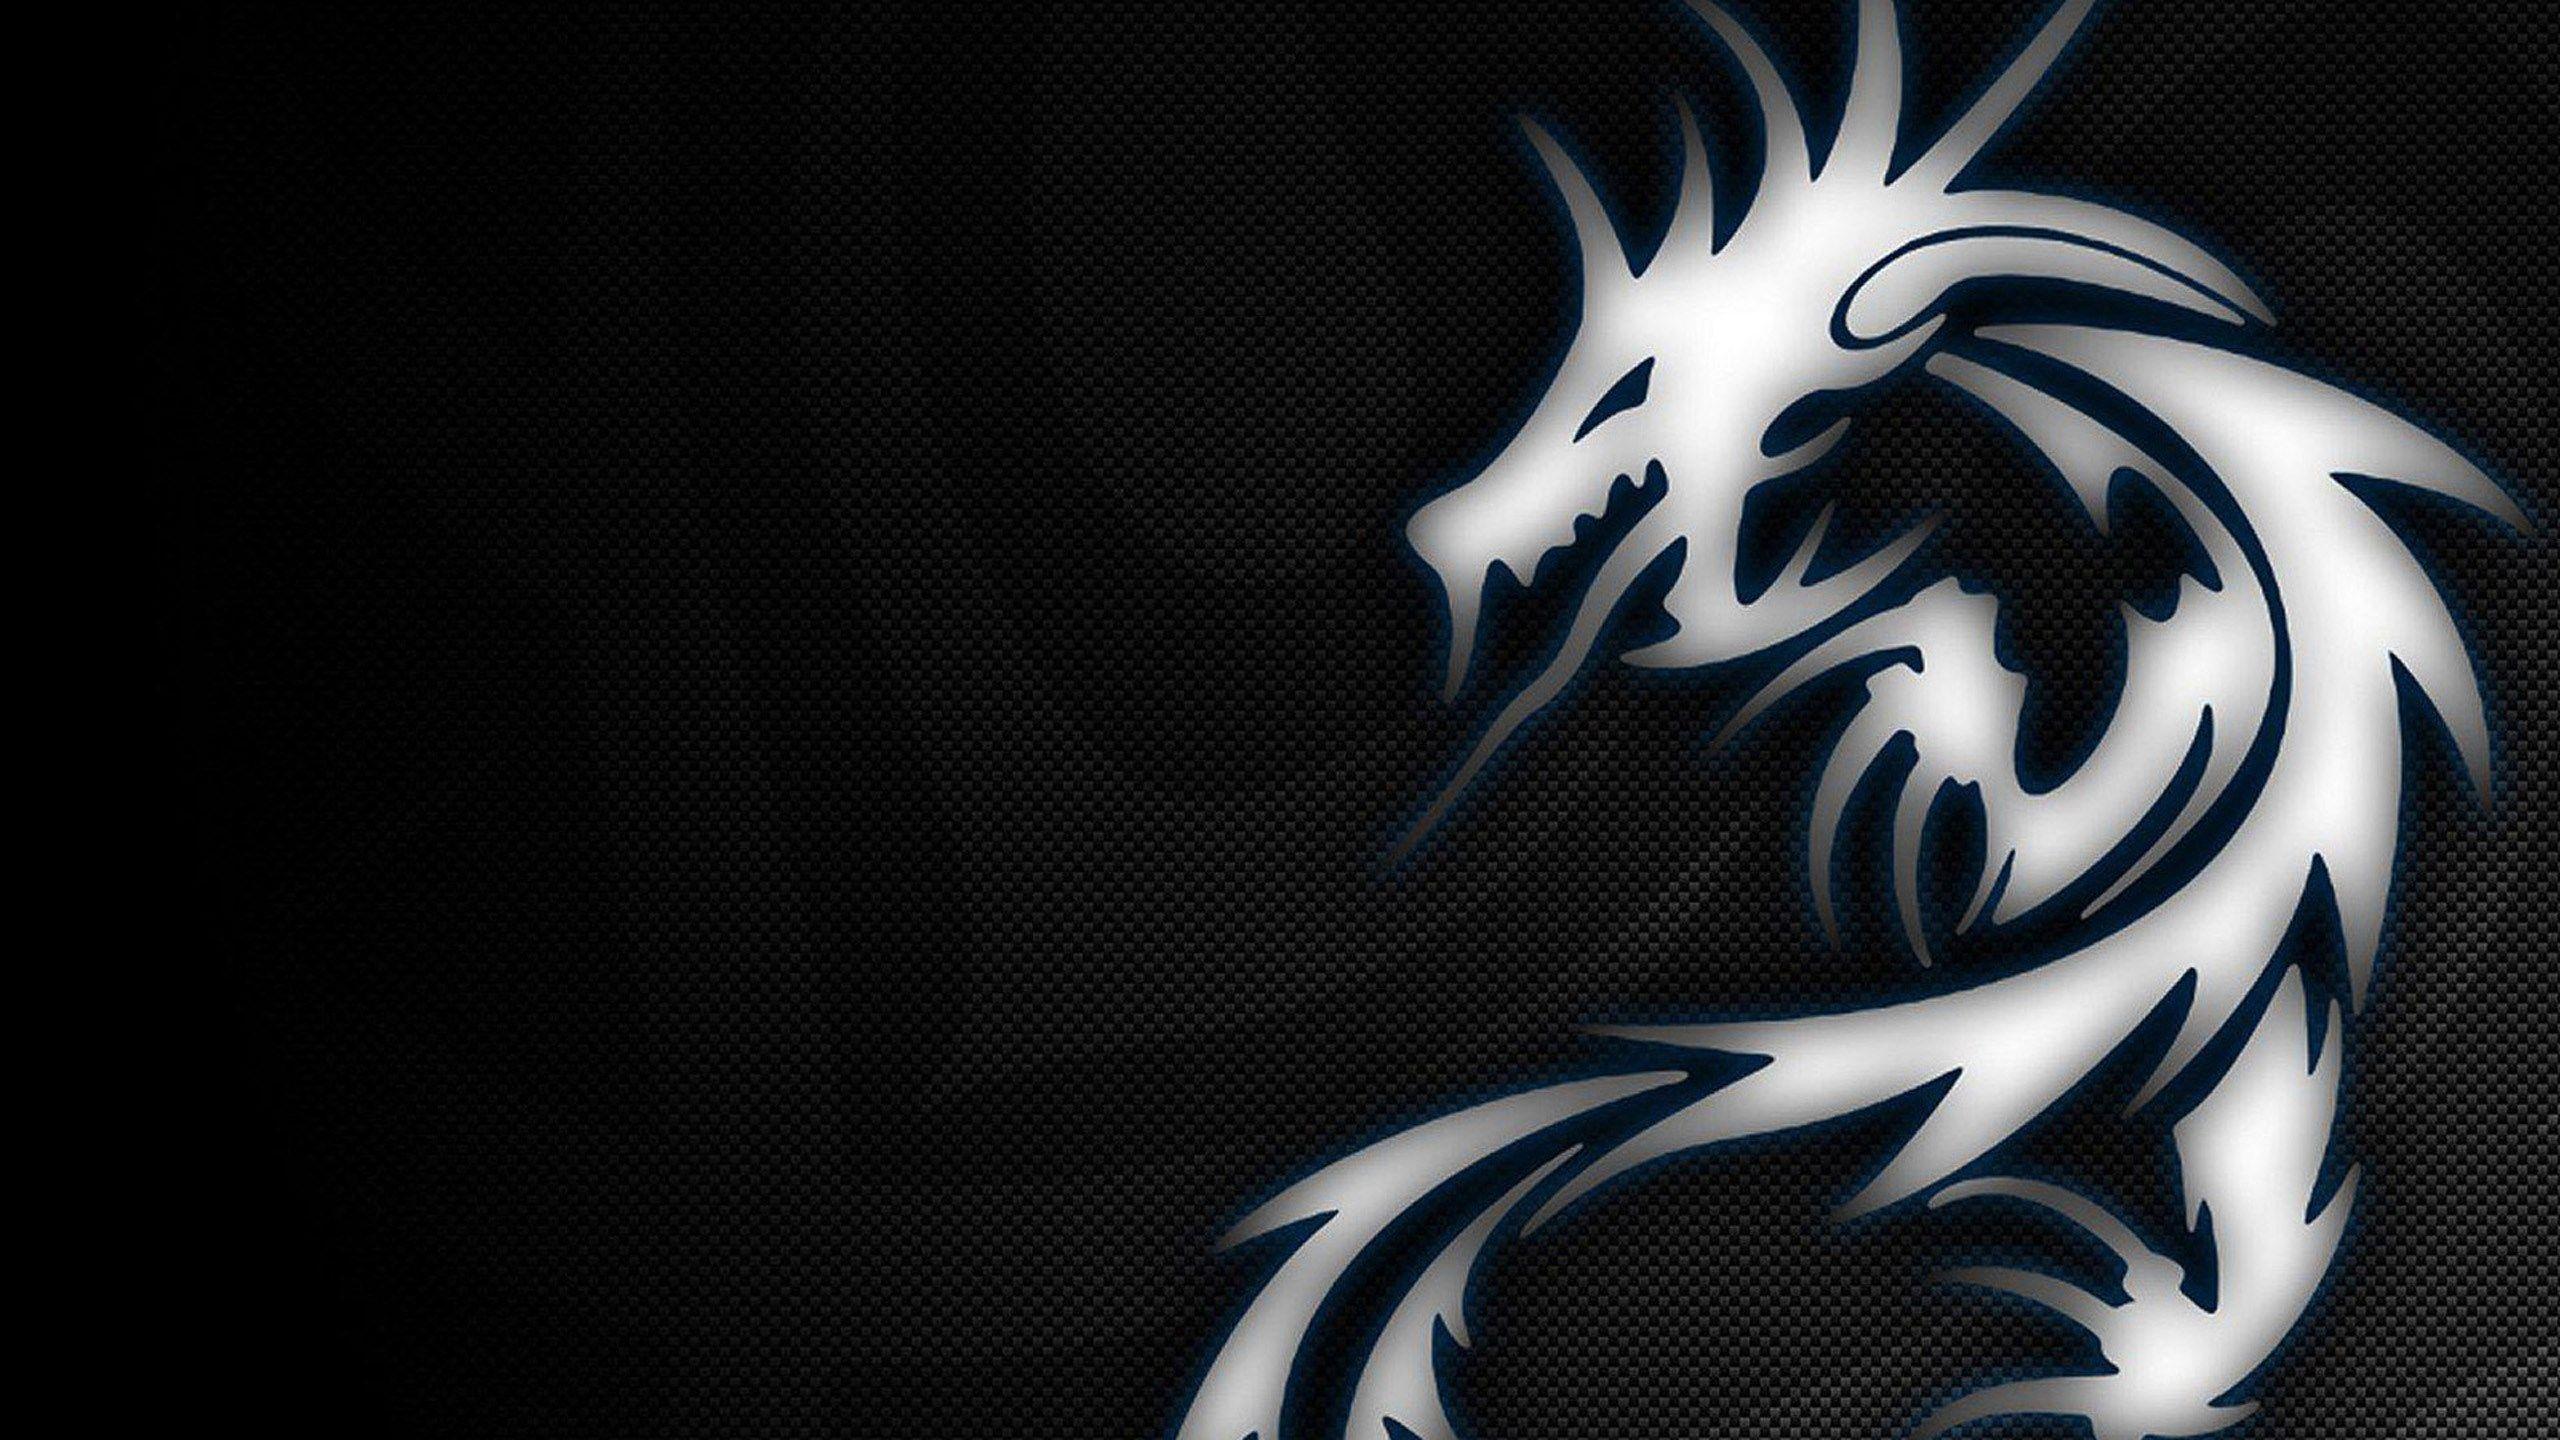 msi dragon background